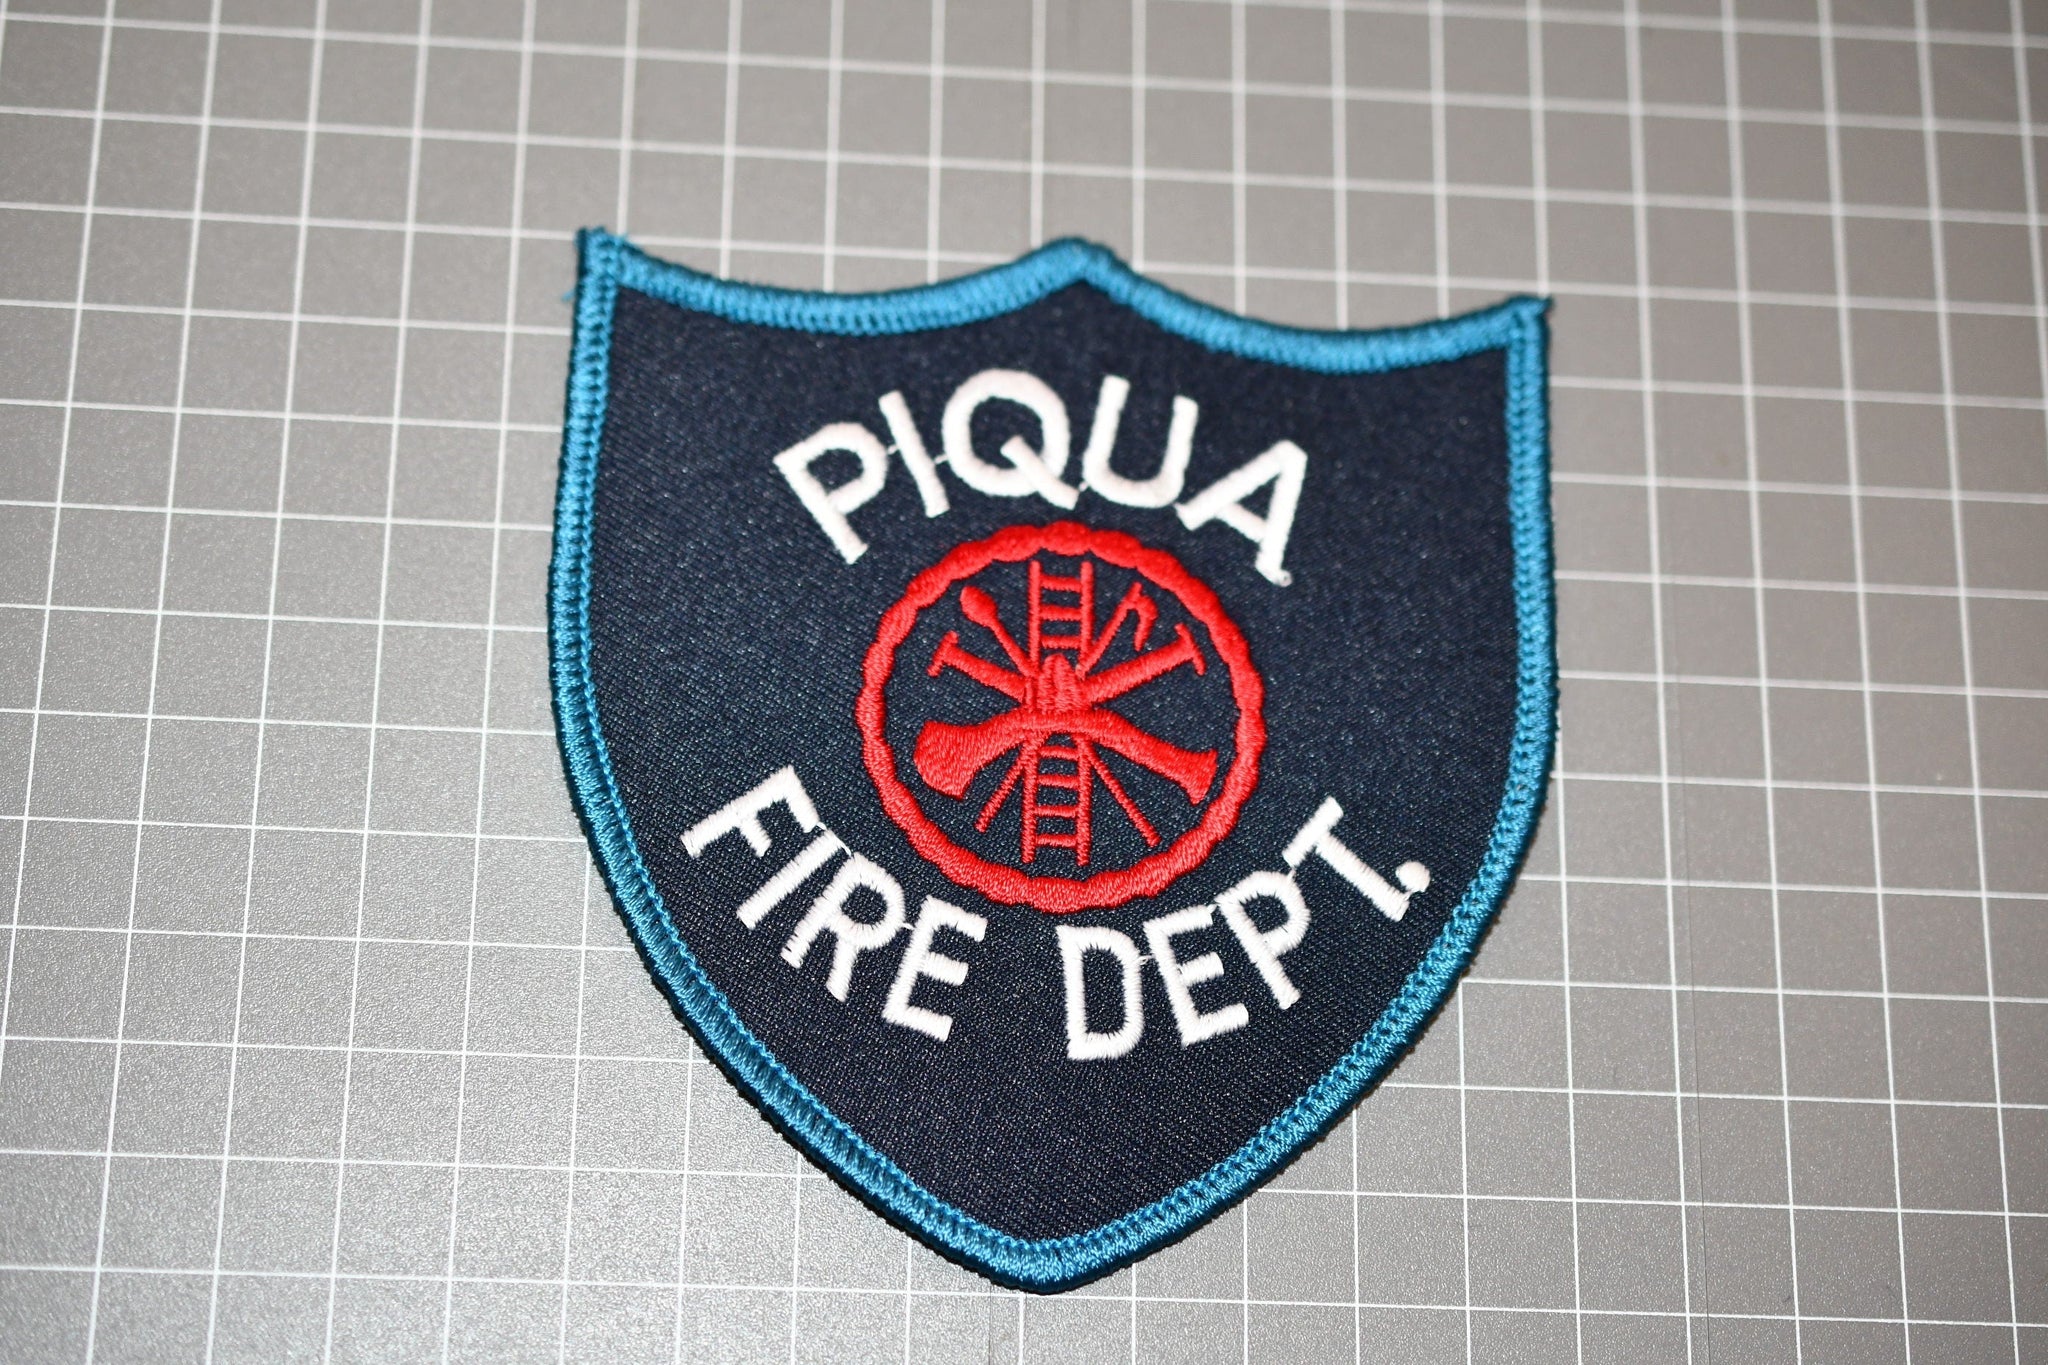 Piqua Ohio Fire Department Patch (B23-149)